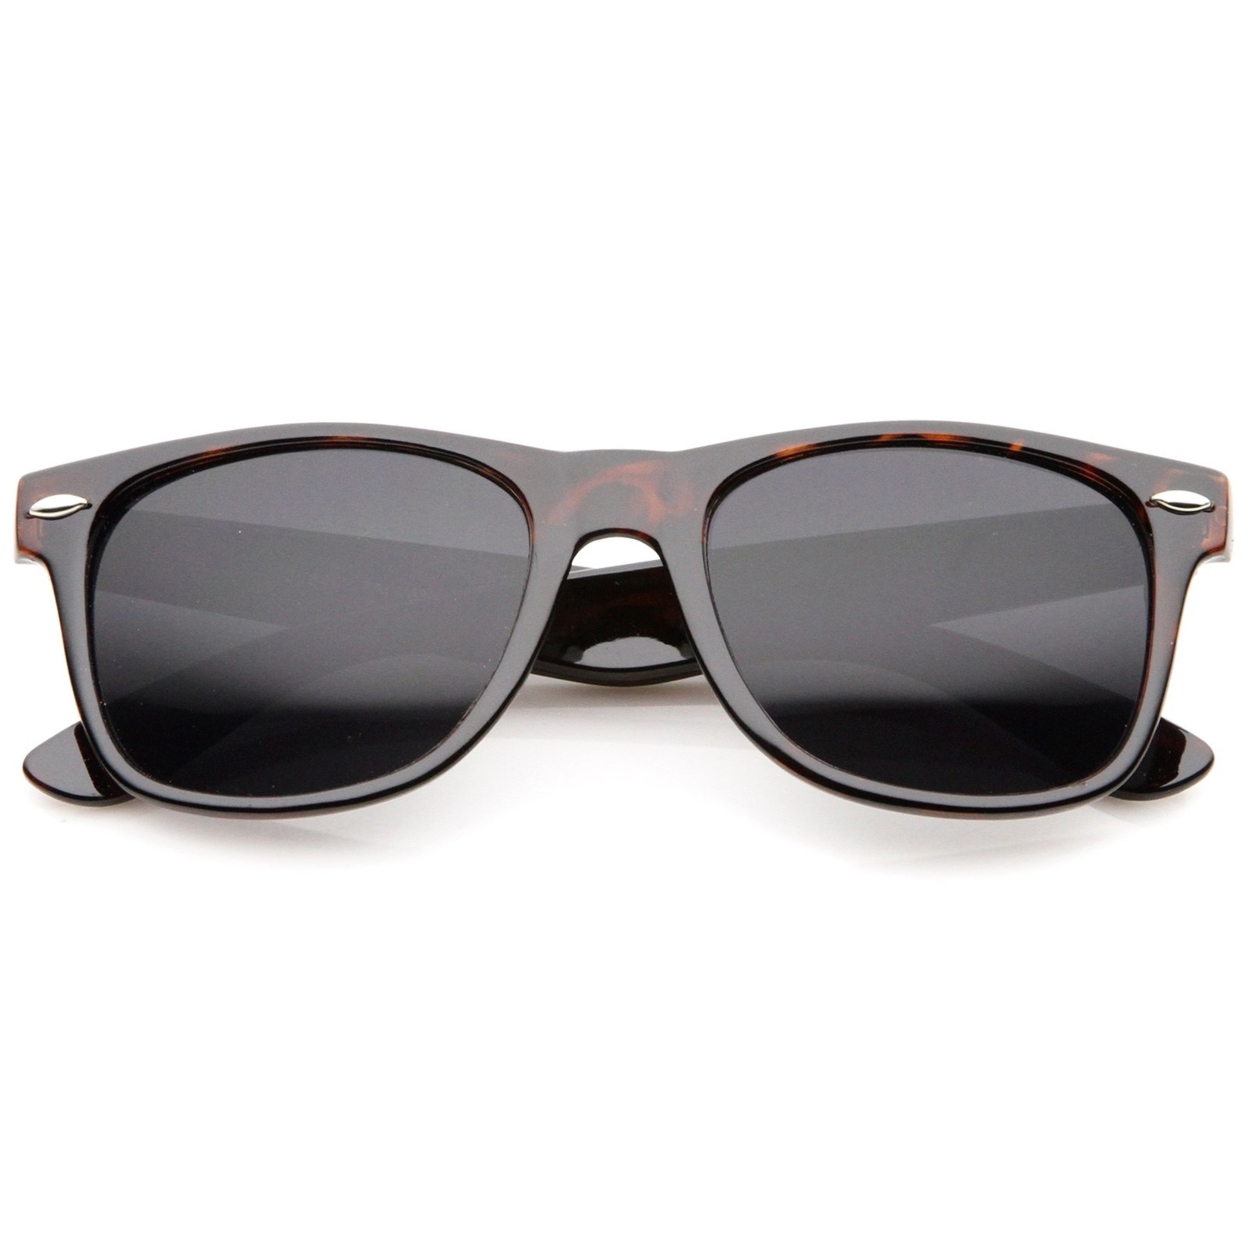 Retro Wide Temple Neutral Colored Lens Horn Rimmed Sunglasses 55mm - 2-Pack , Shiny Black + Tortoise